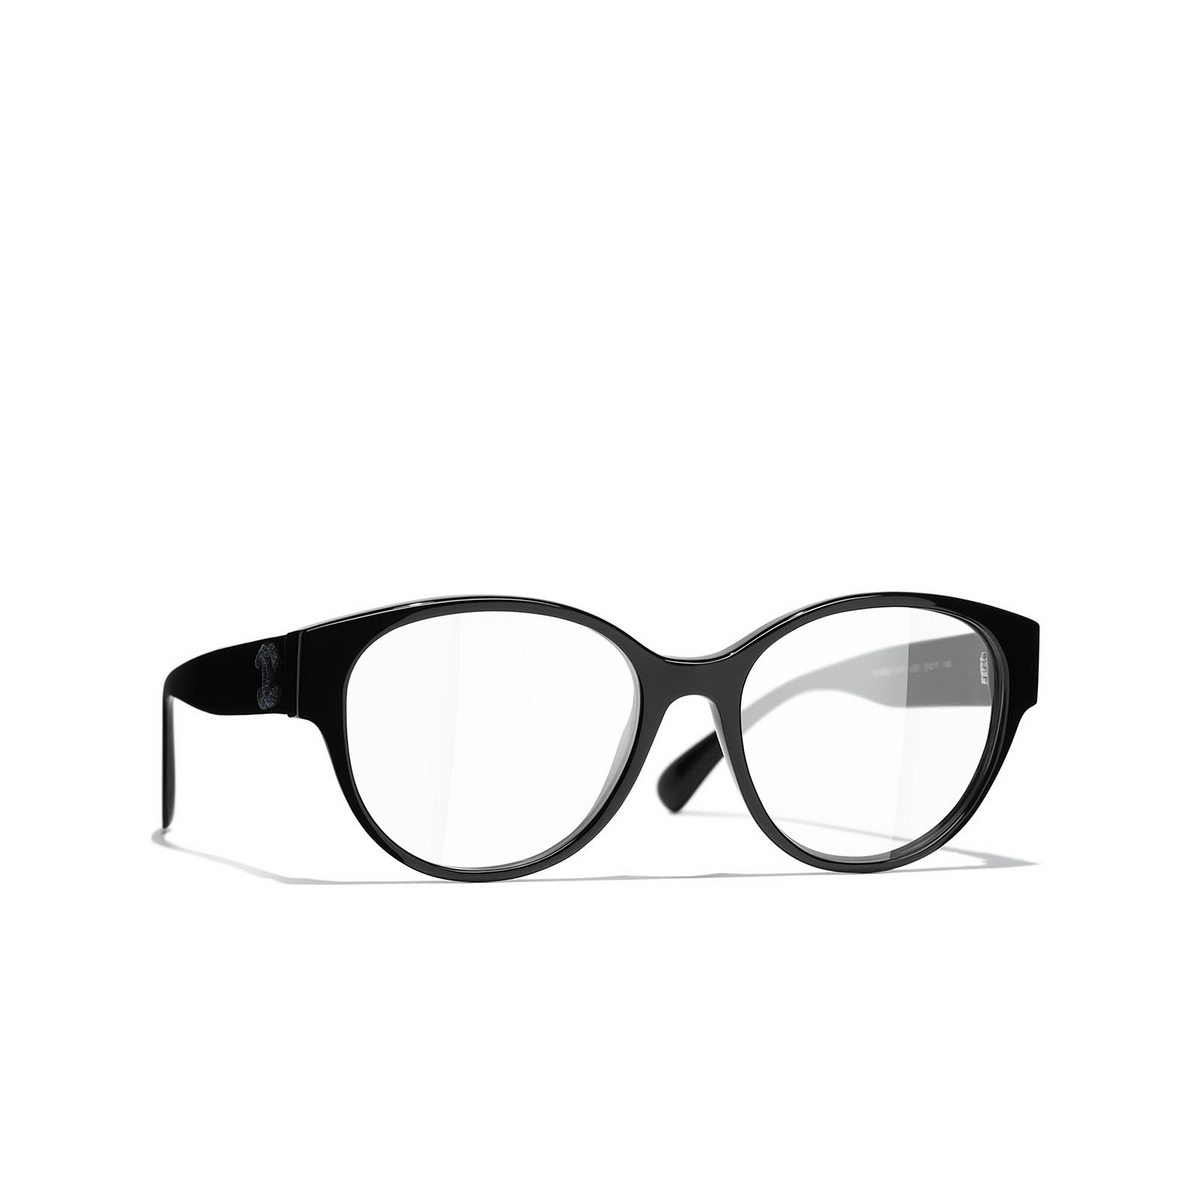 CHANEL pantos Eyeglasses C501 Black